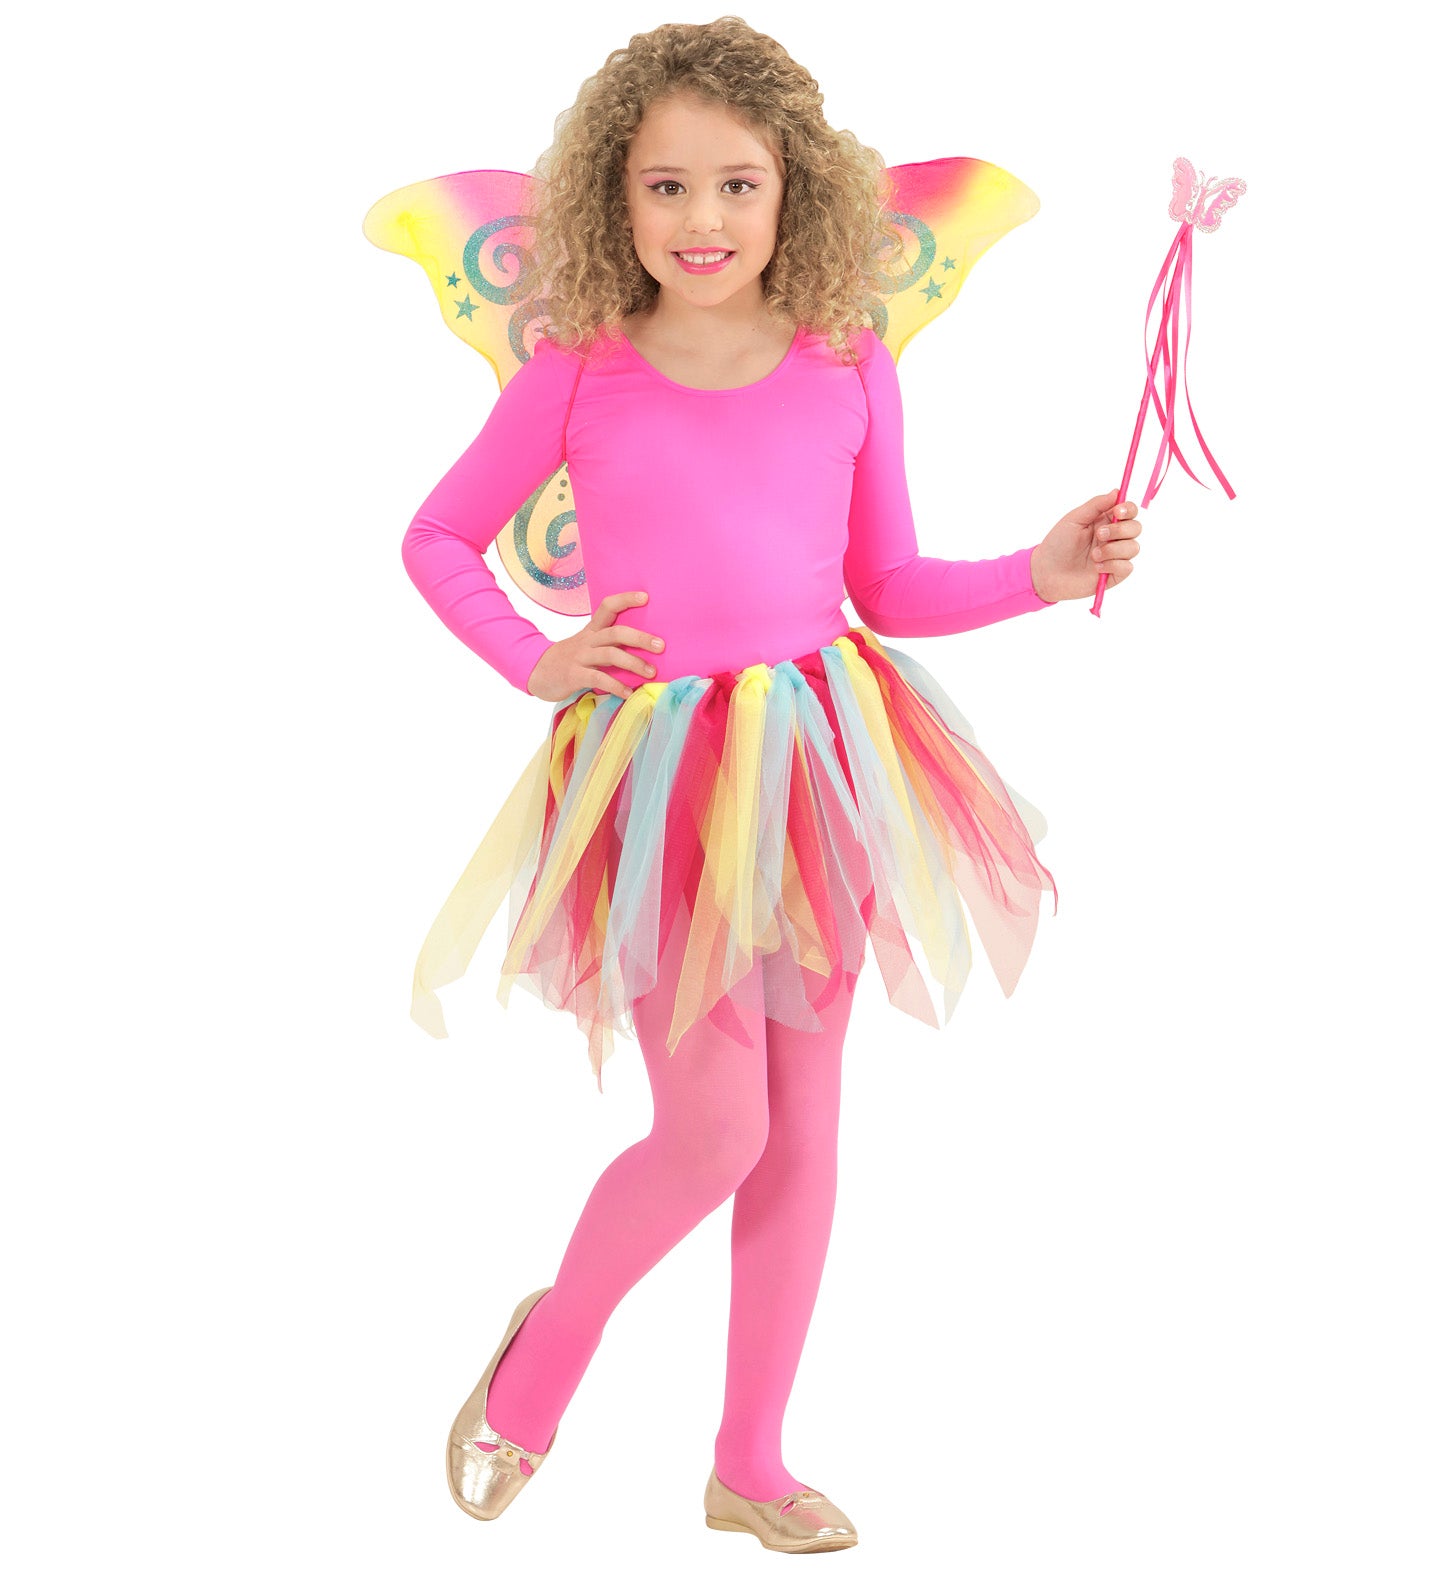 Fantasy Fairy outfit kit for Children